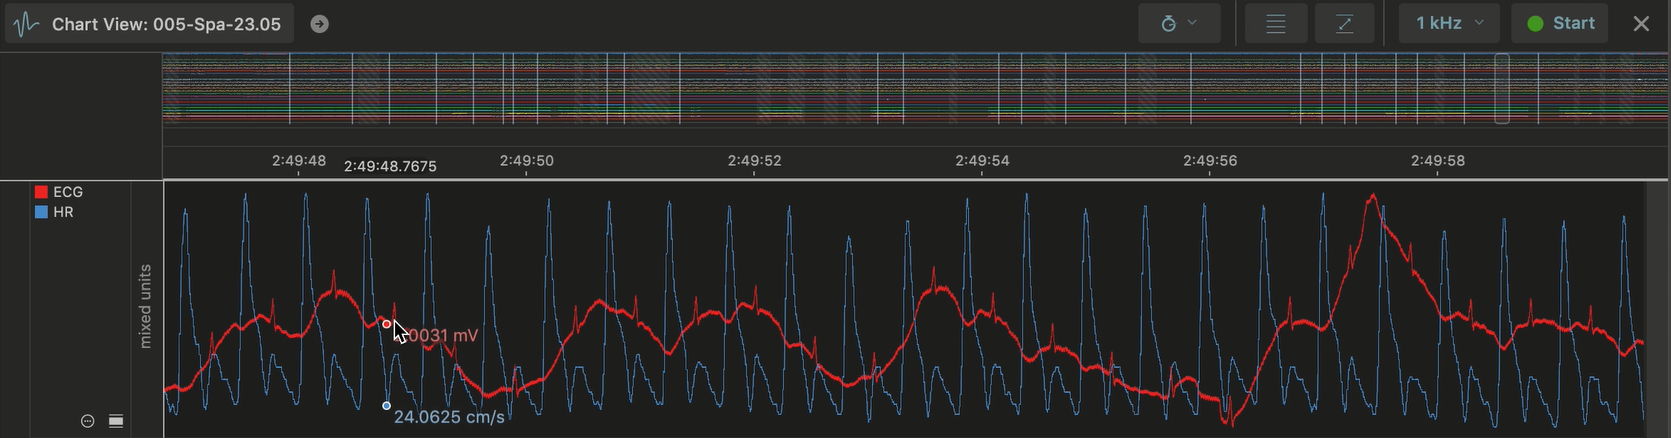 LabChart Lightning (ADI) overlay multiple signals for quantitative data analysis 